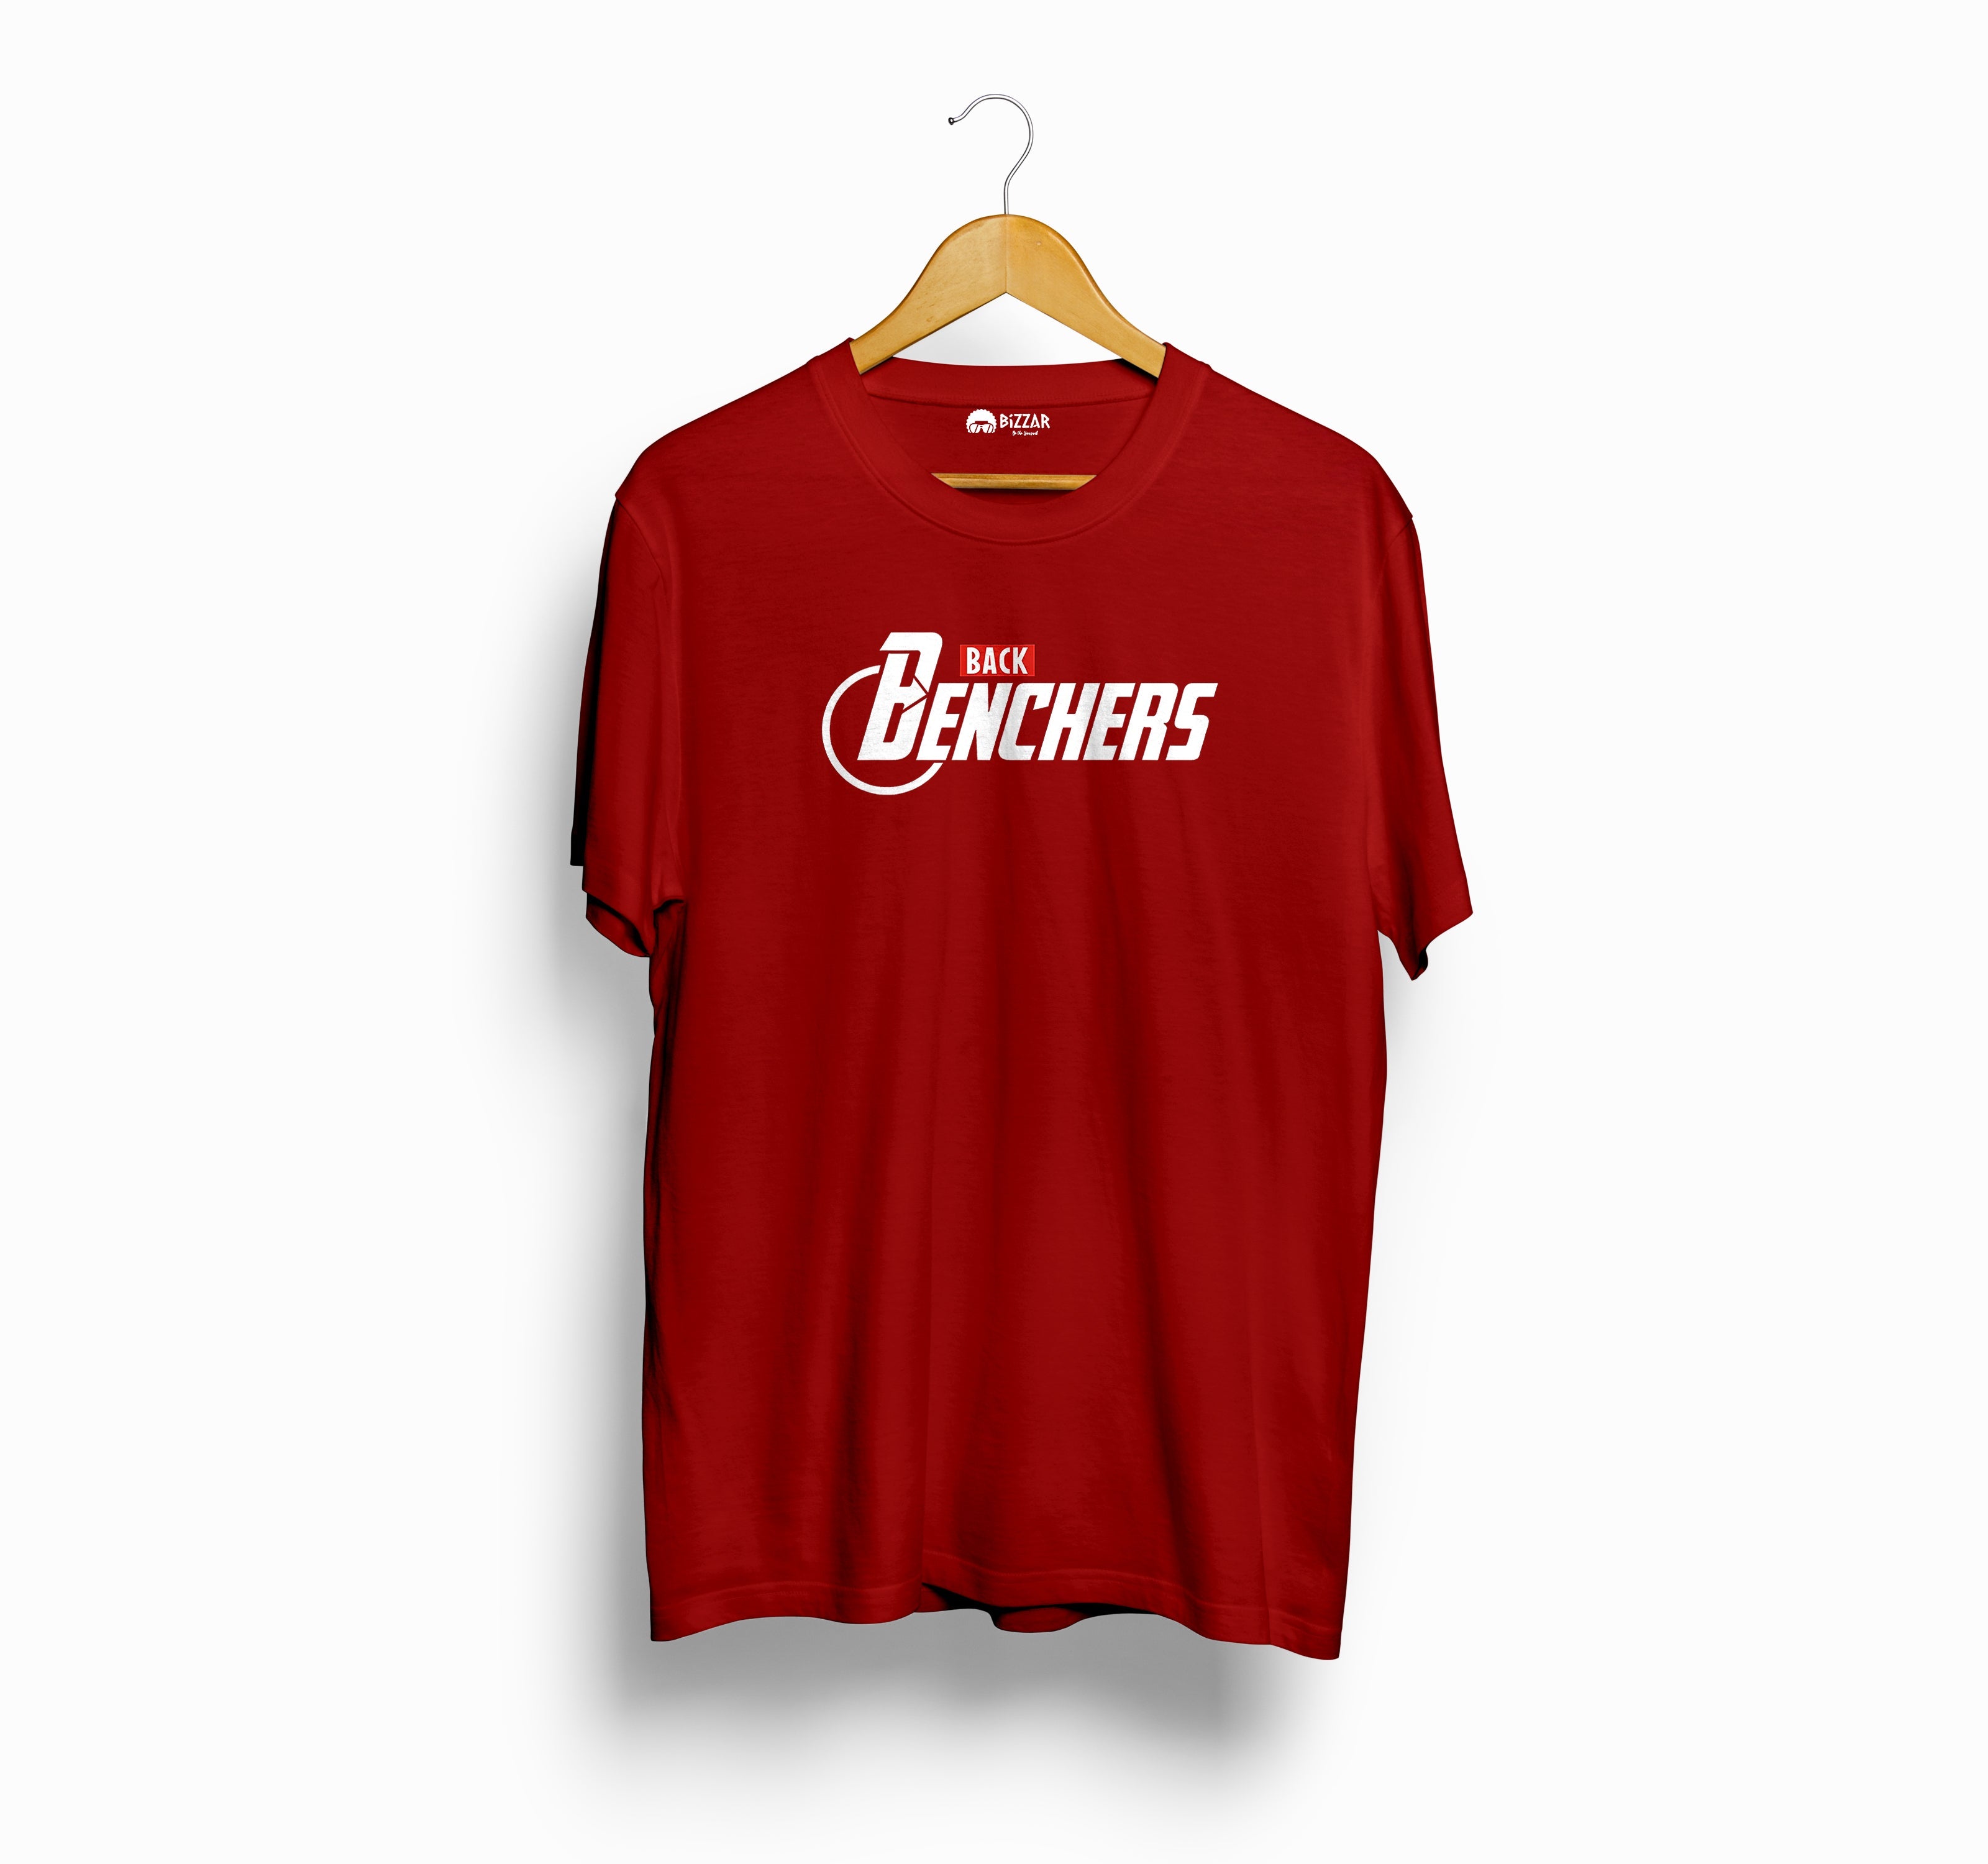 Bizzar's Back Bencher's Red T-Shirt